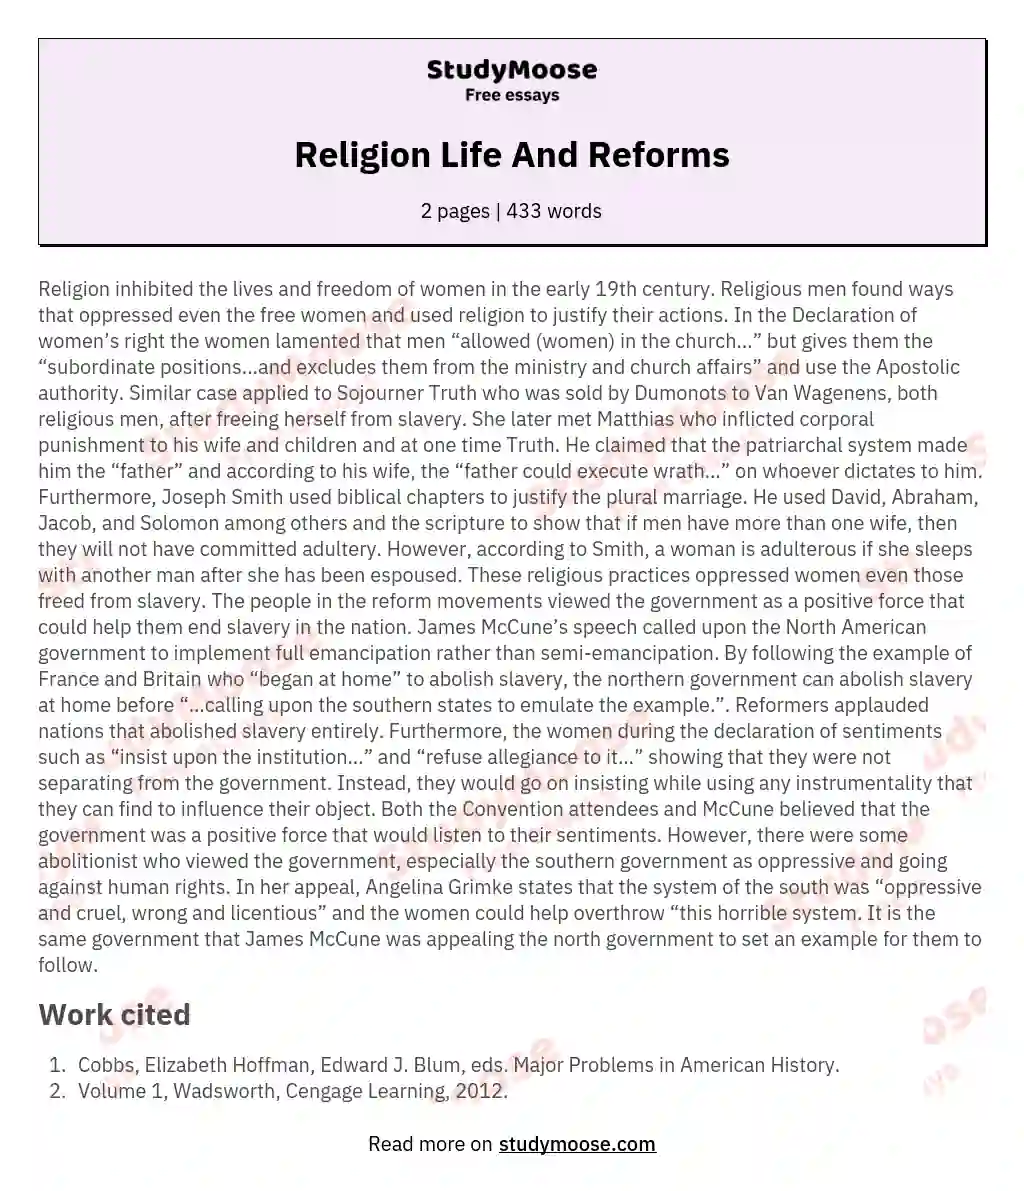 Religion Life And Reforms essay